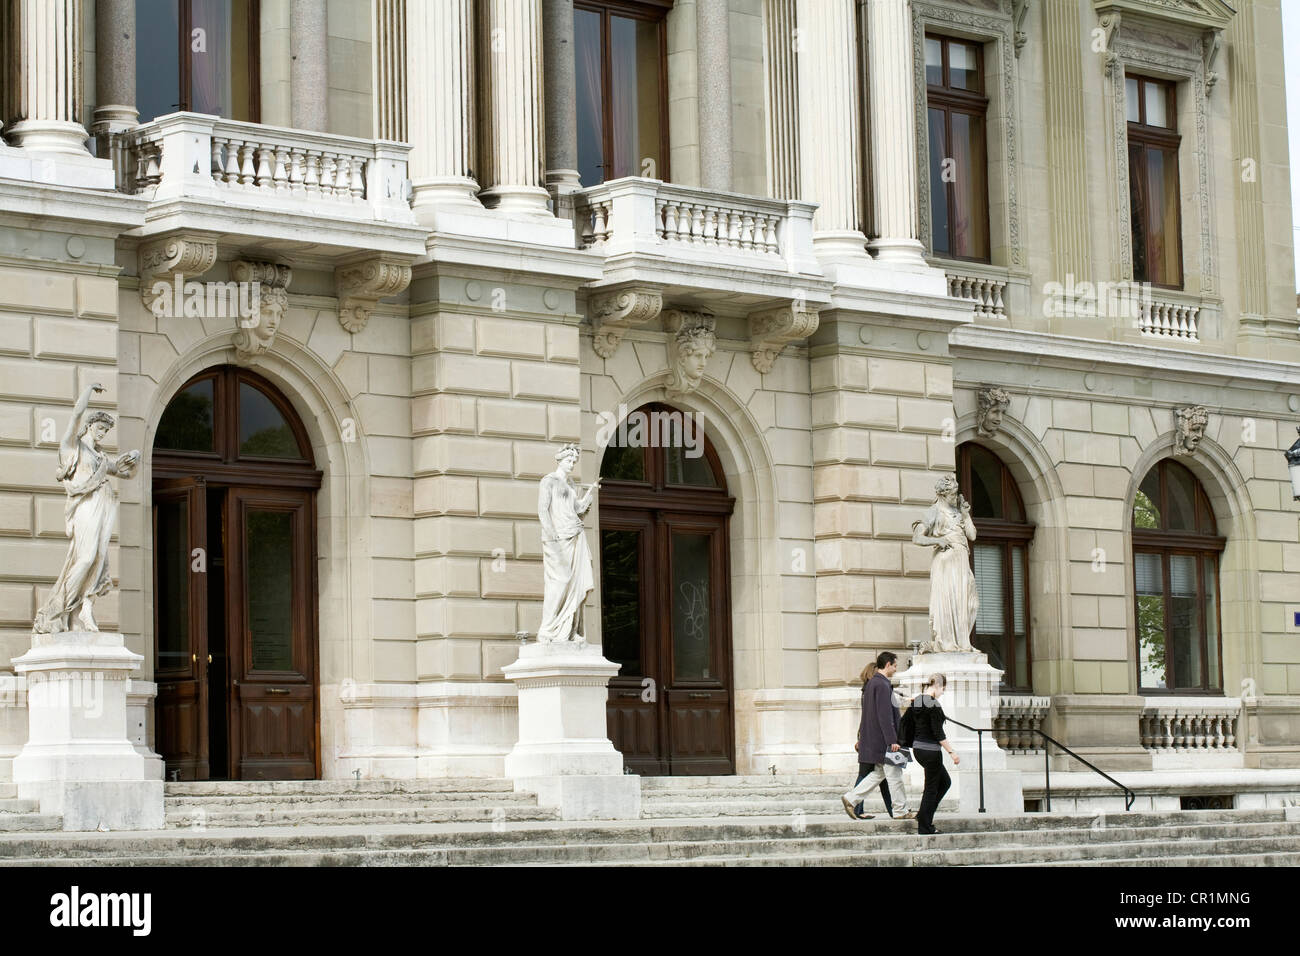 Switzerland, Geneva, Place neuve, Grand Opera, facade of Second Empire style Stock Photo